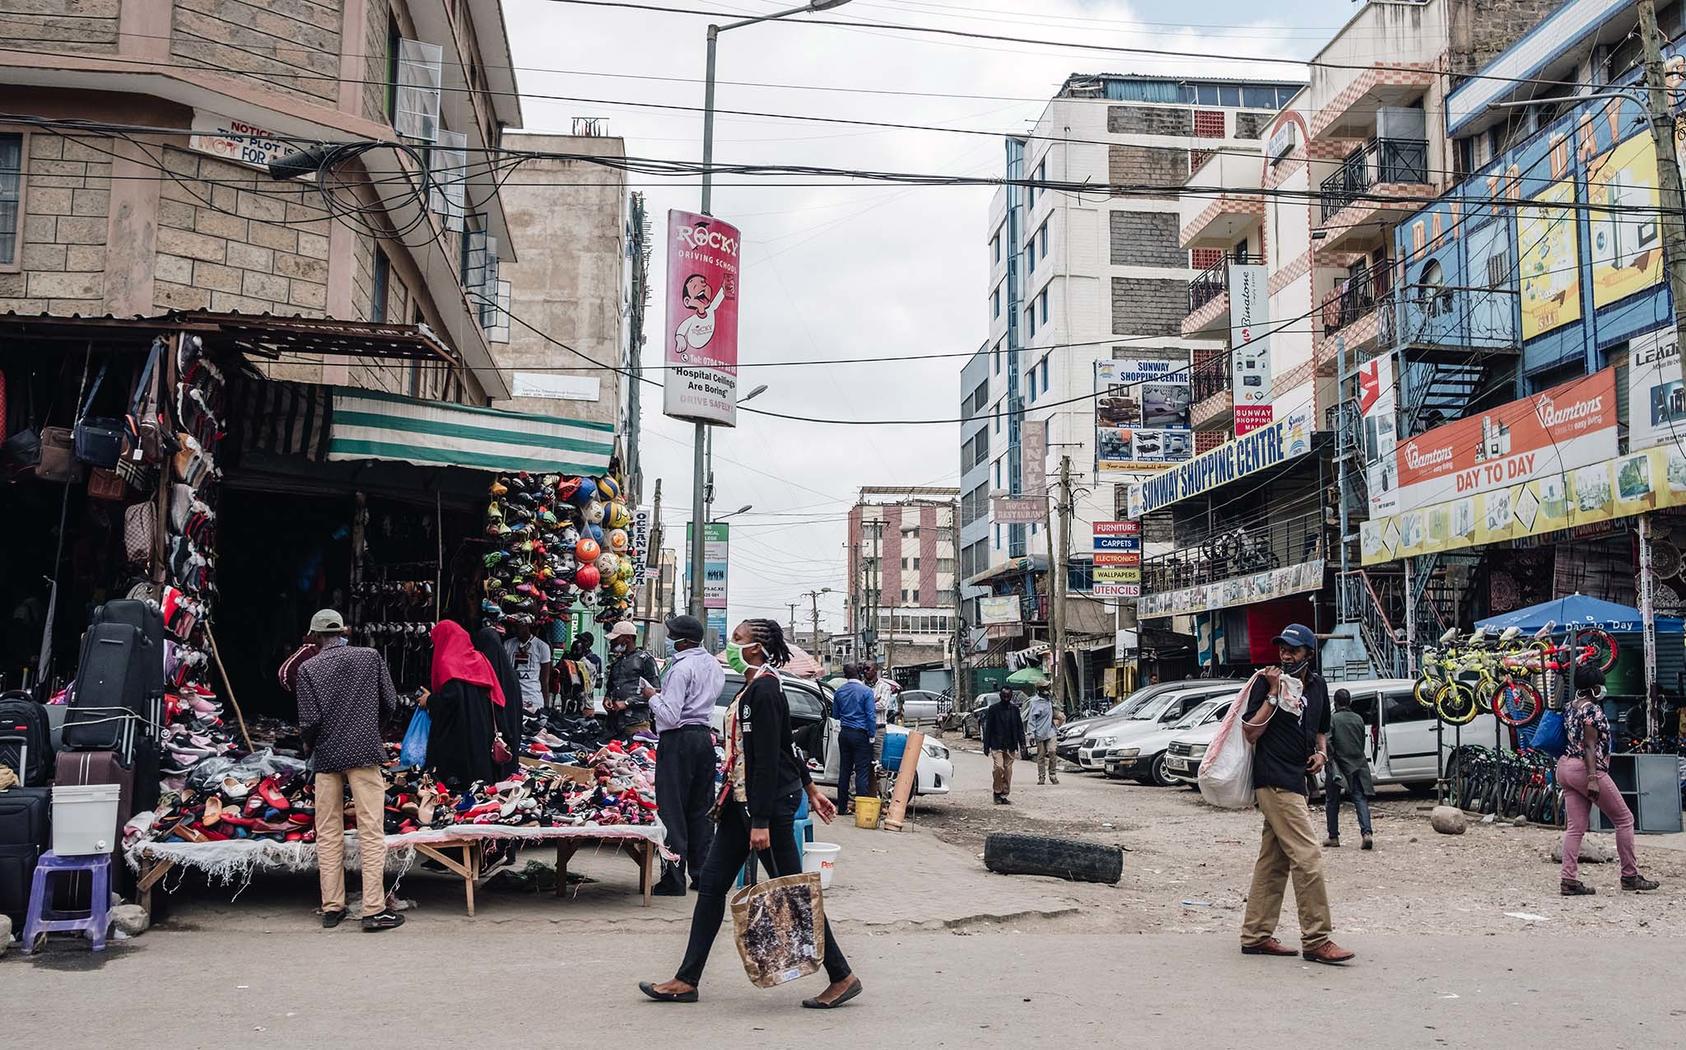 Pedestrians fill a busy street in Nairobi, Kenya. June 9, 2020. (Khadija Farah/The New York Times)